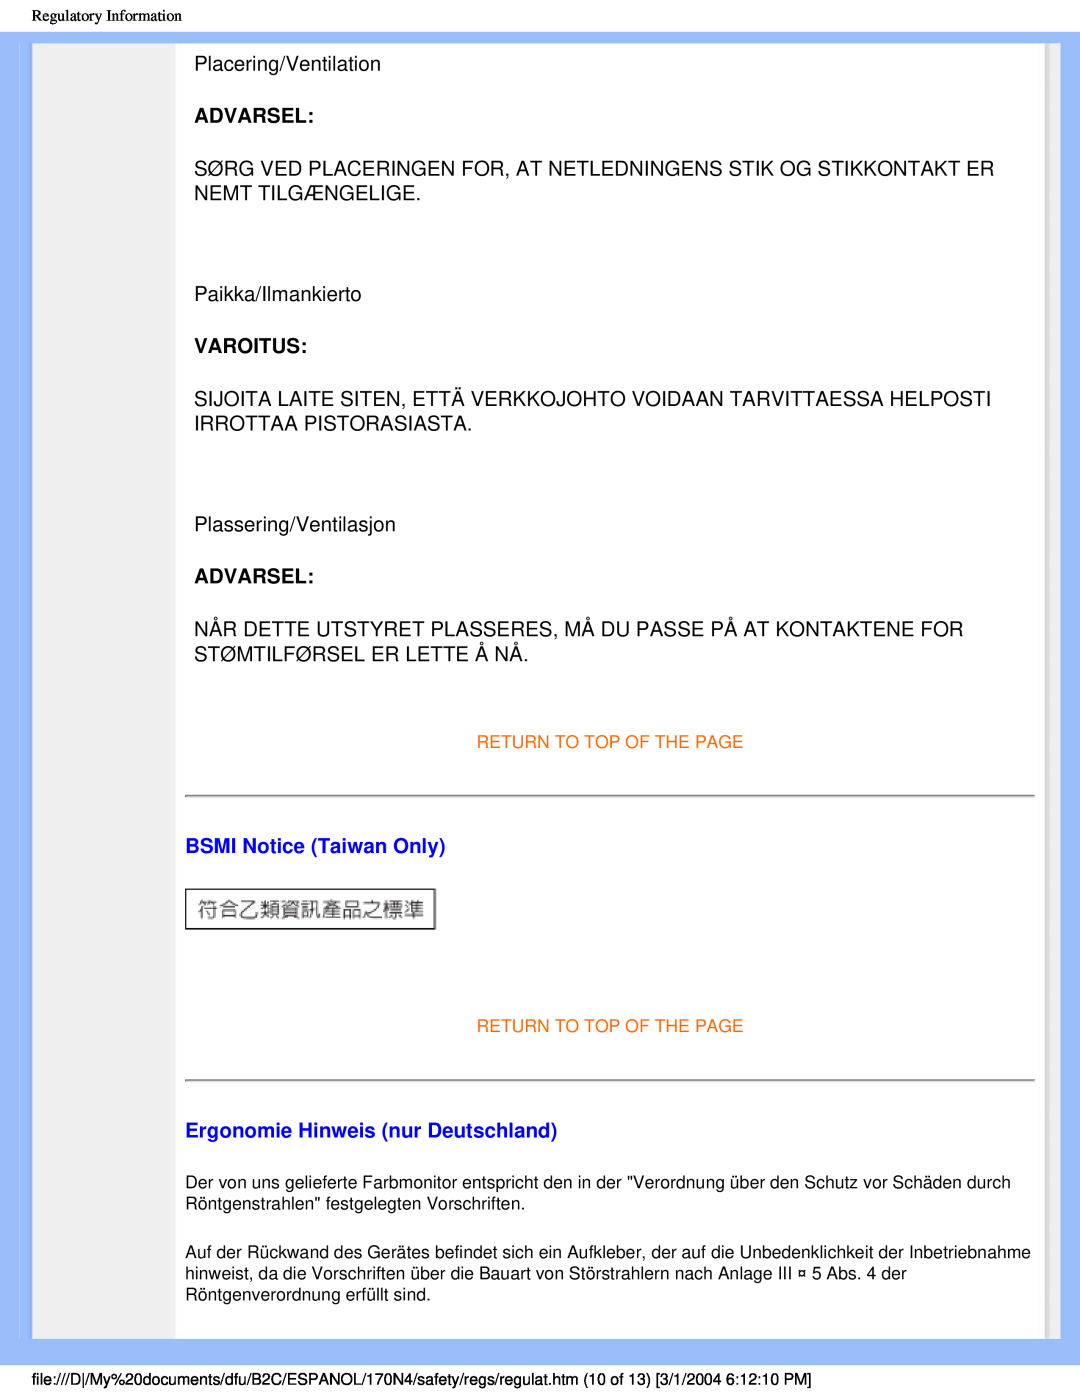 Philips 170N4 user manual Advarsel, Varoitus, BSMI Notice Taiwan Only, Ergonomie Hinweis nur Deutschland 